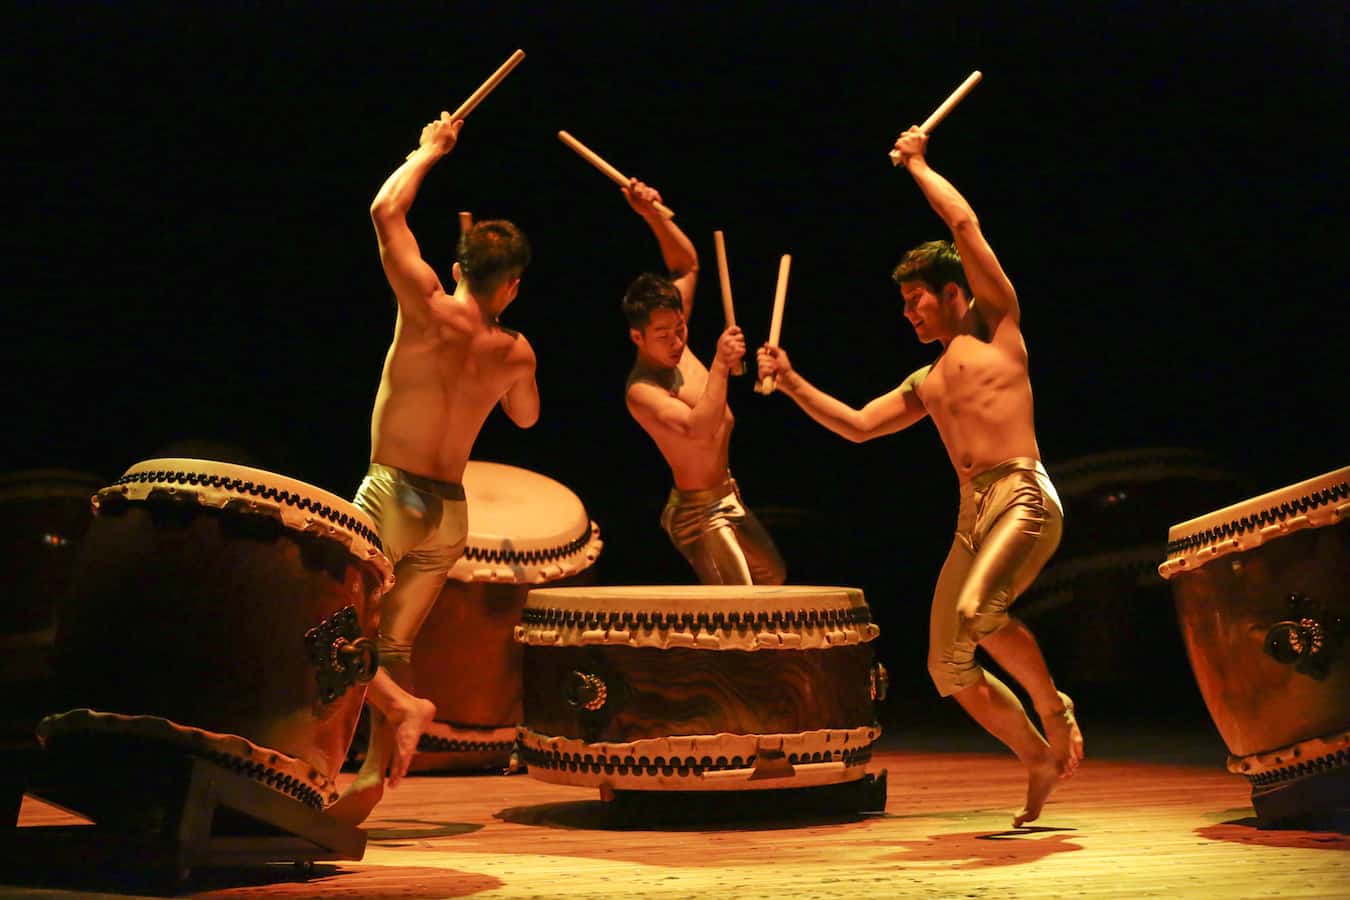 Taiko – Japanese music tradition